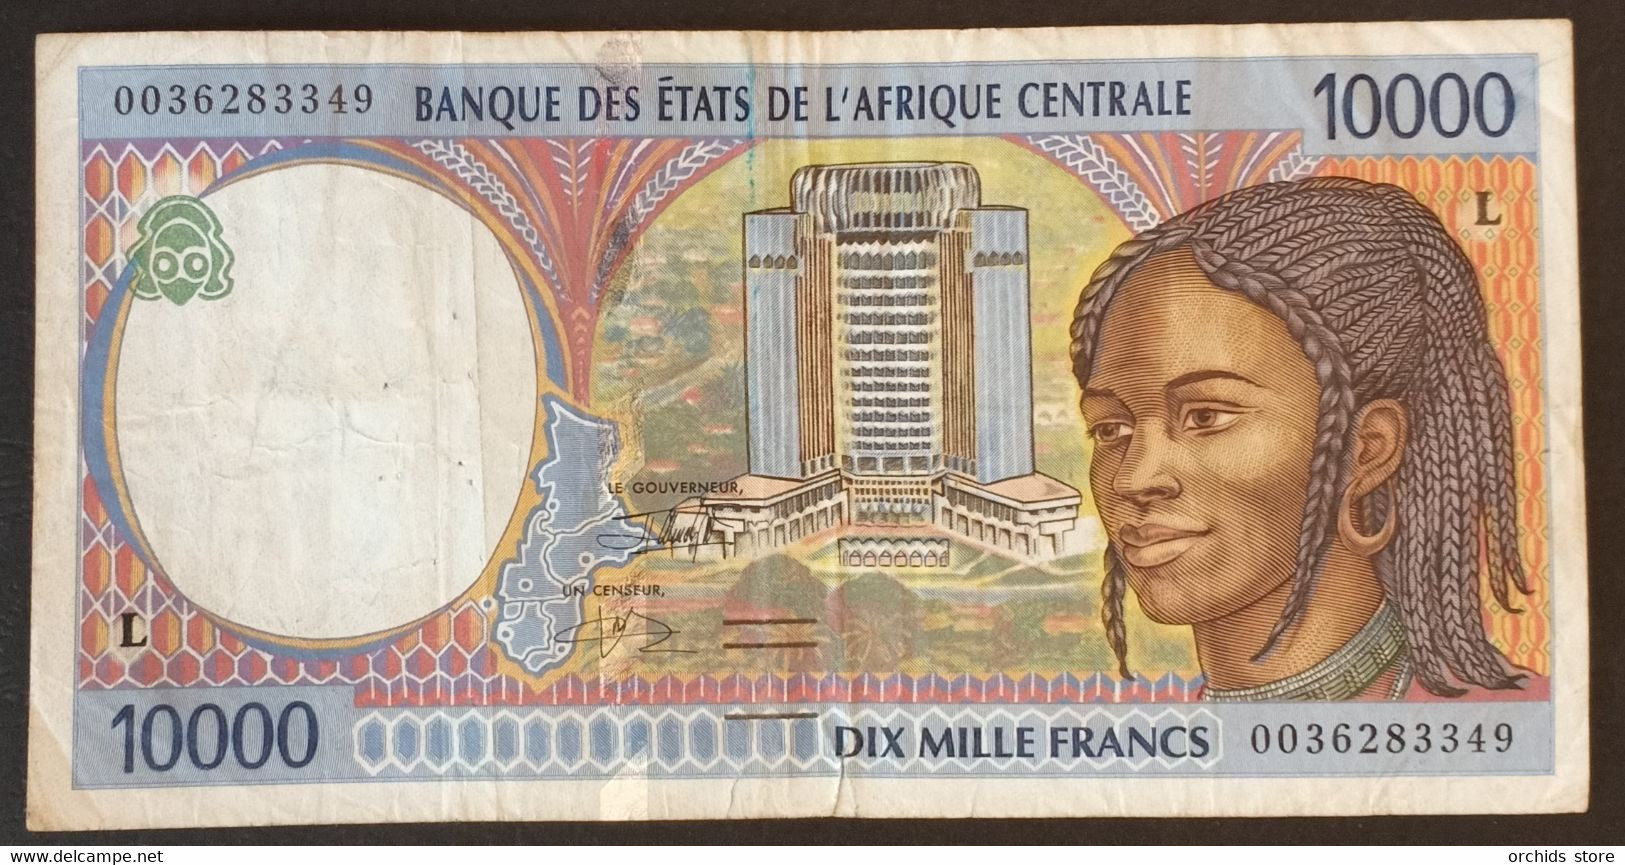 AC2020 - Central African Republic 2000 Banknote 10000 Francs L - Gabon - Gabon